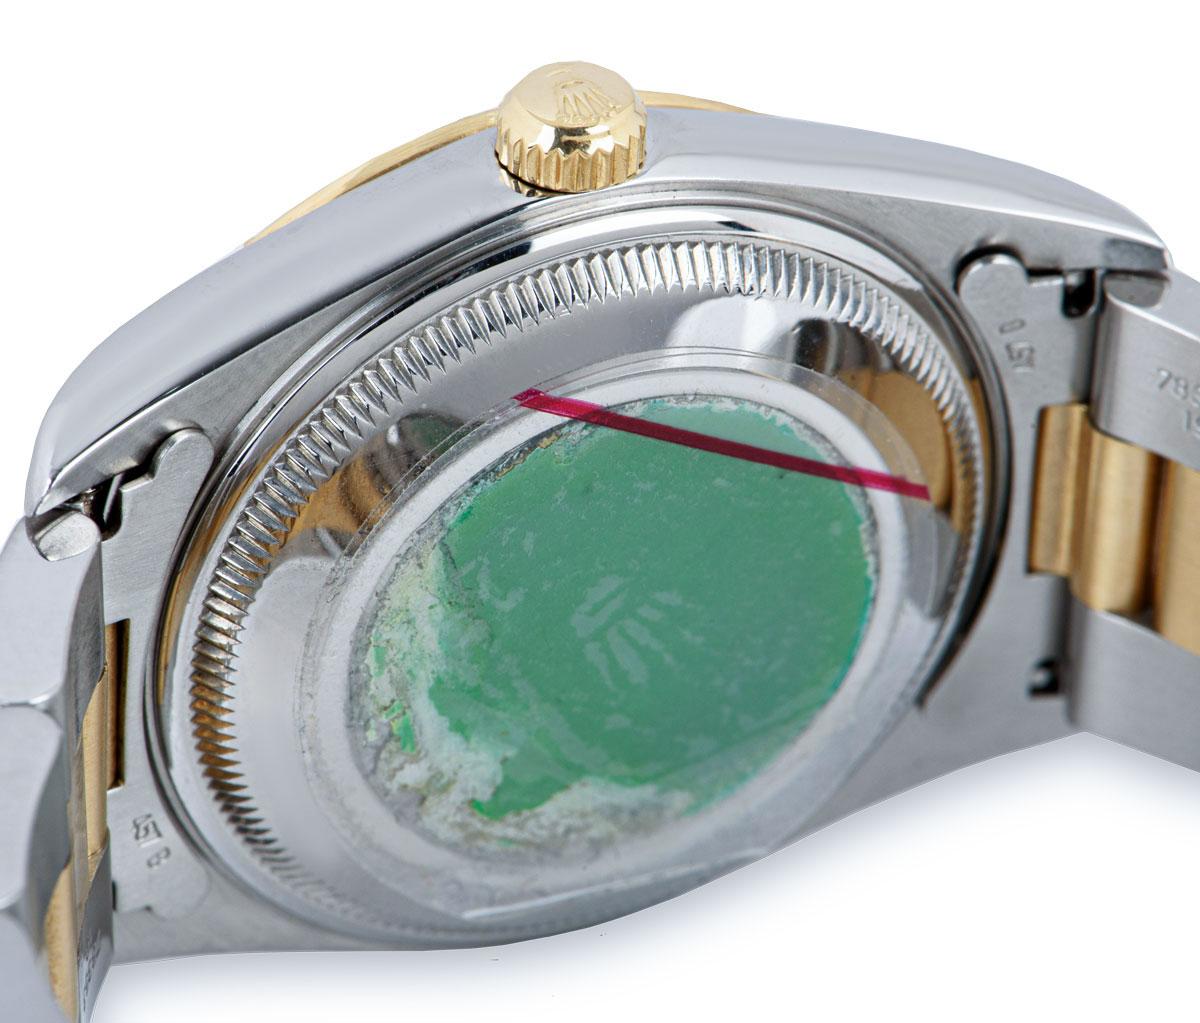 Men's Rolex Date Stainless Steel and 18 Karat Gold White Saudi Arabian Crest Dial